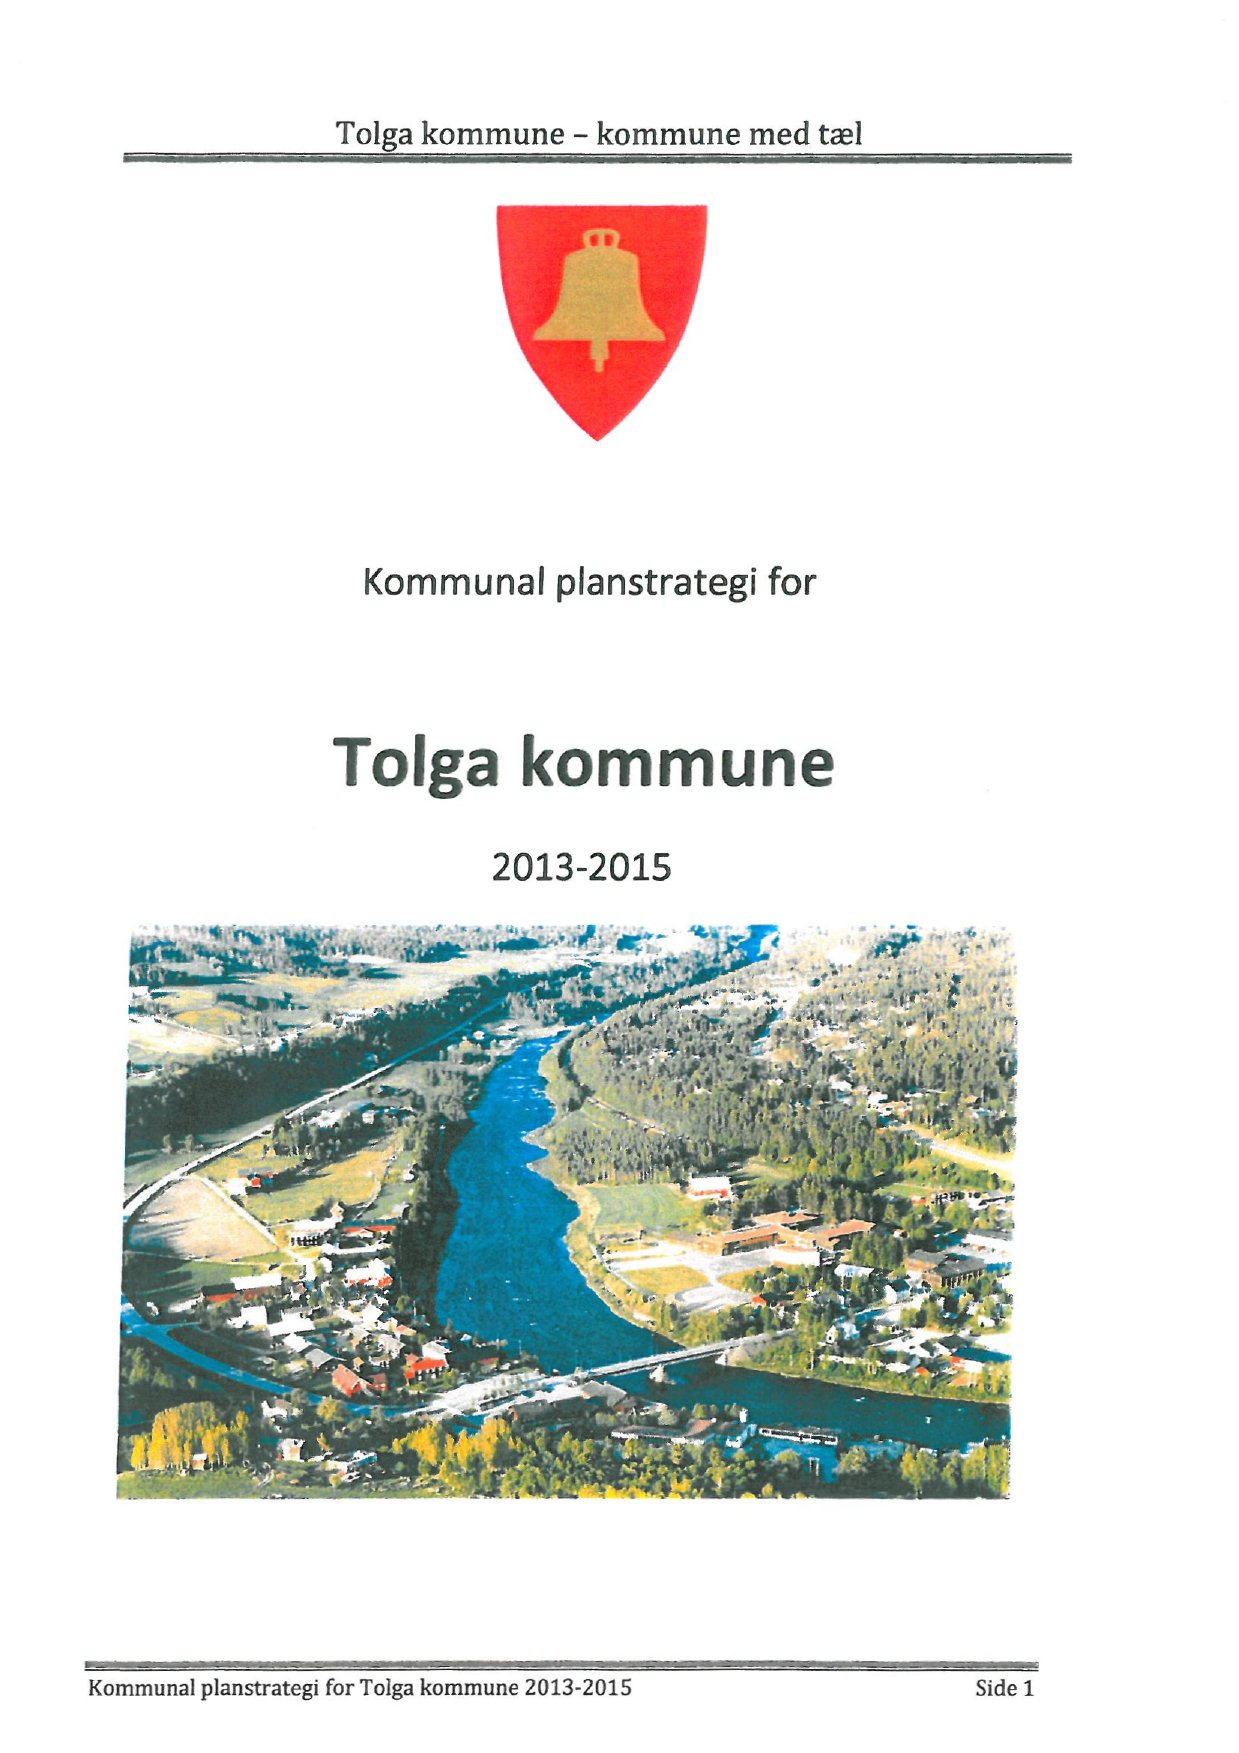 Kommunal planstrategi for Tolga kommune 2013-2015 ;91;11;:/" If ;